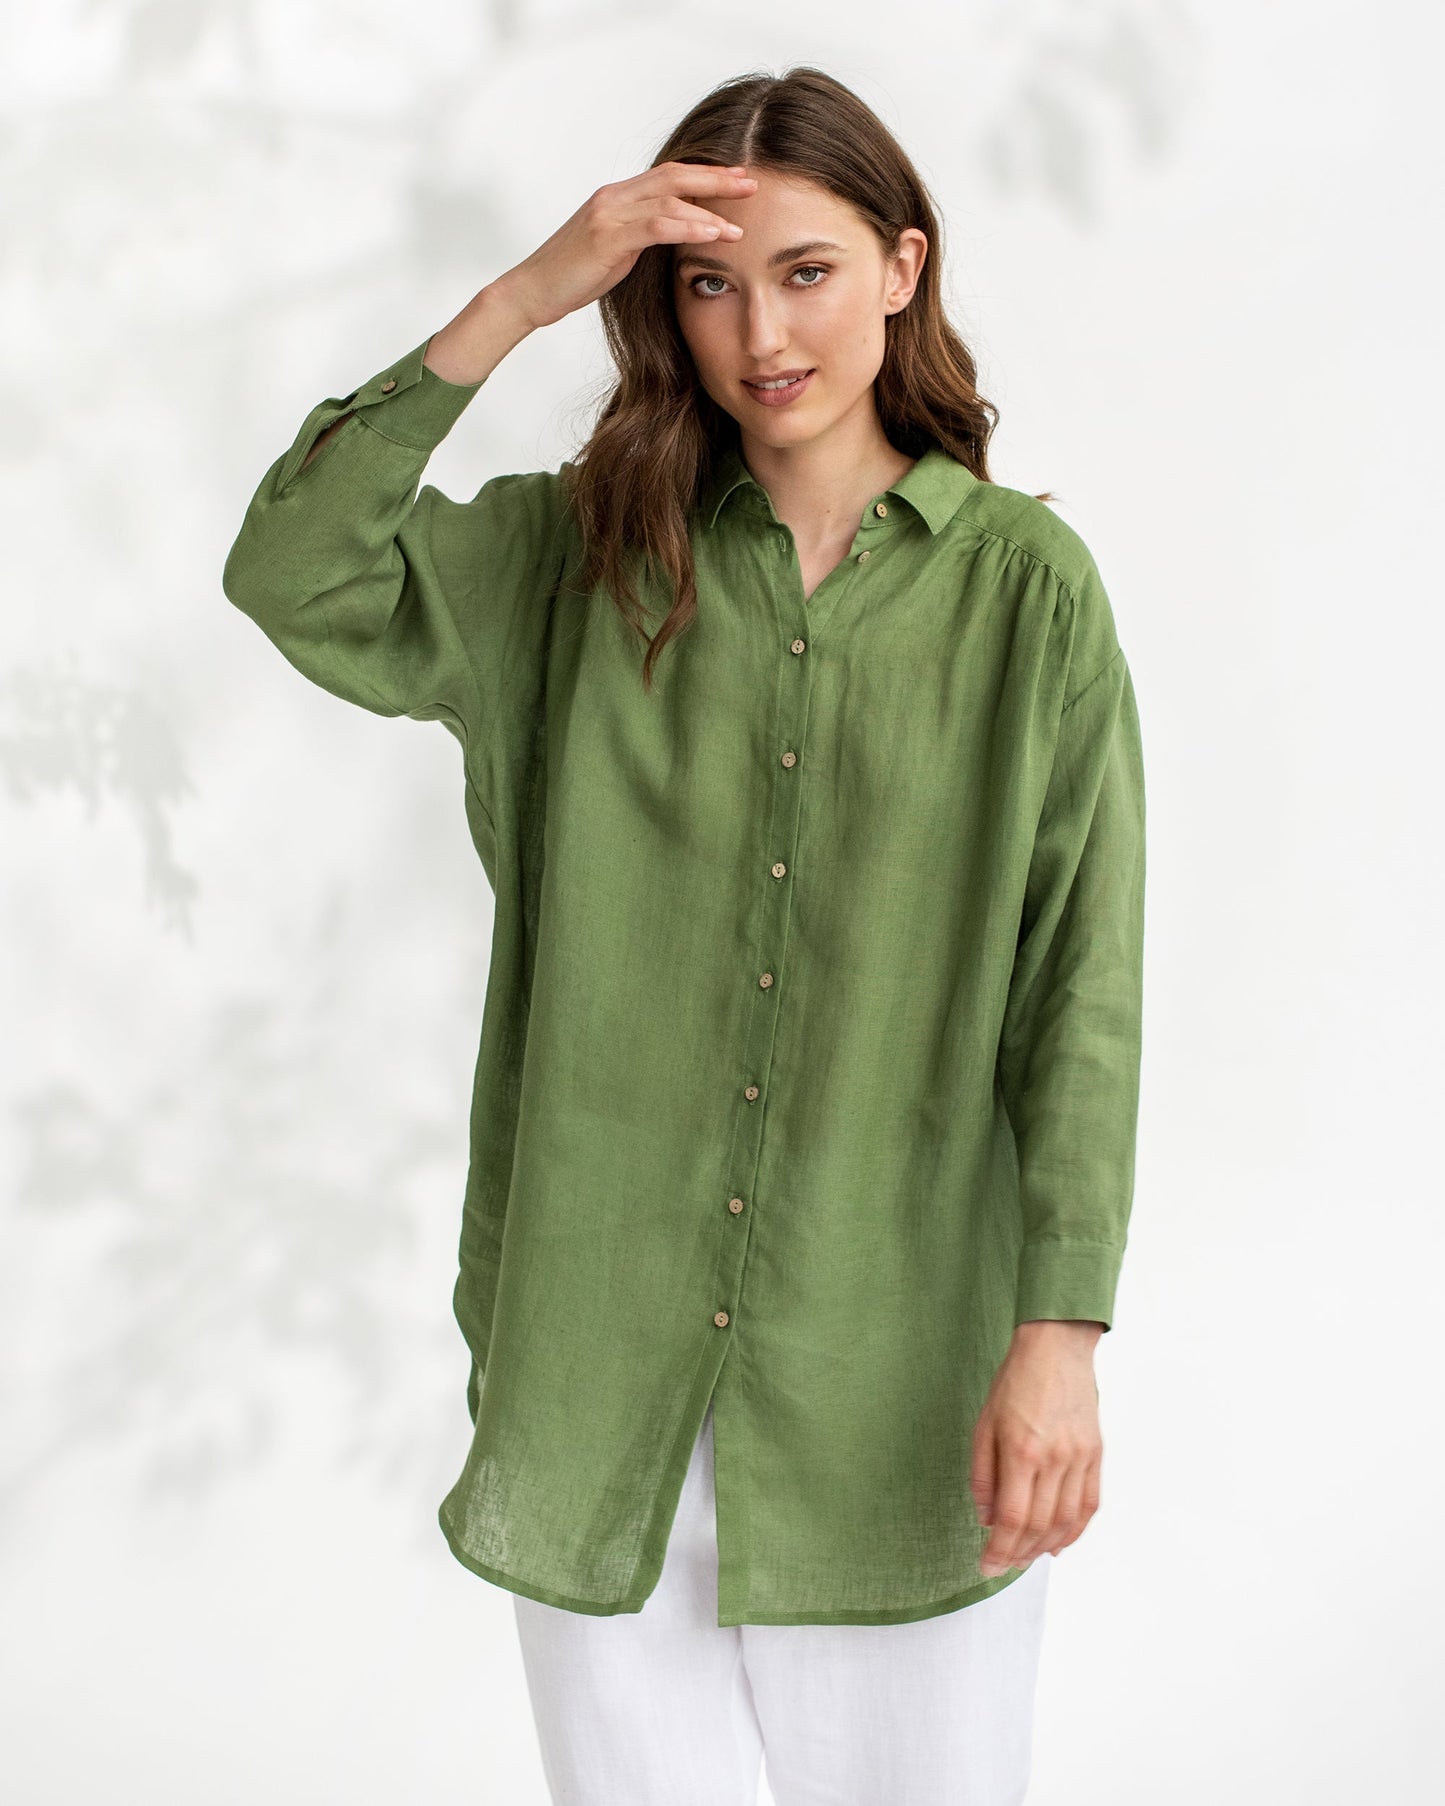 Linen shirt SAUSALITO in forest green - MagicLinen